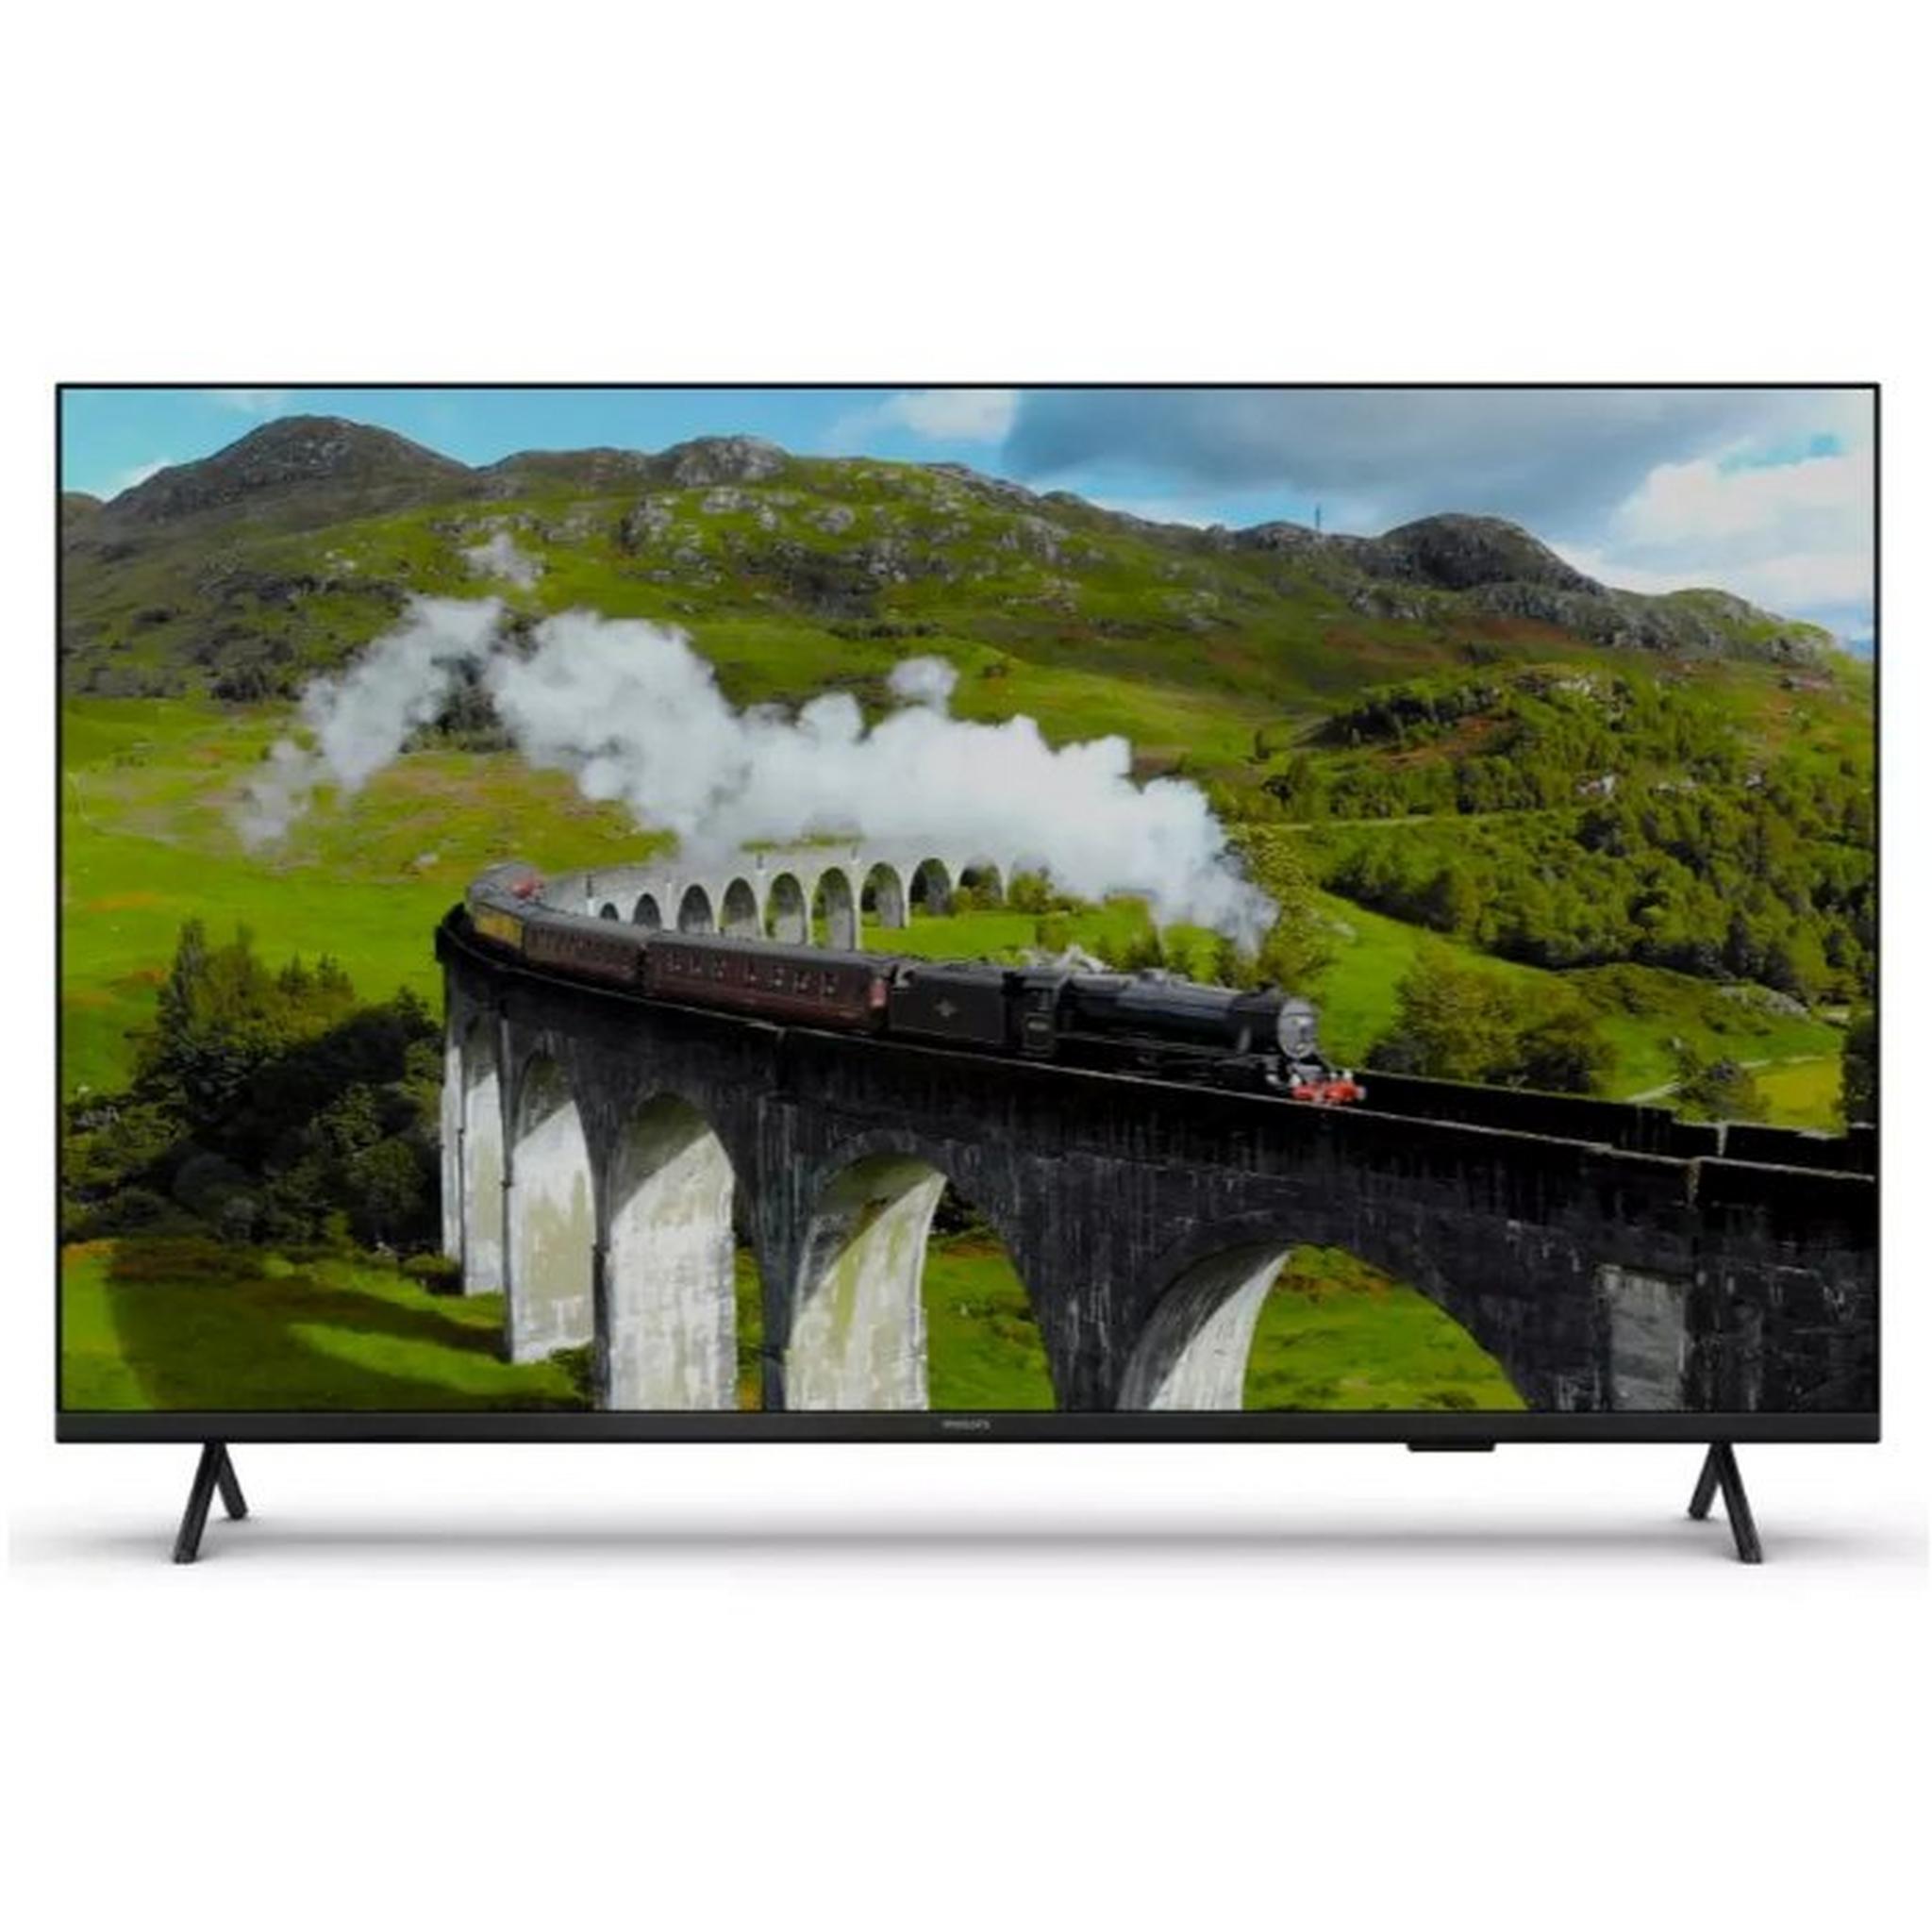 Philips 7400 series 55-Inches 4K UHD LED Google TV, 55PUT7428/56 – Black